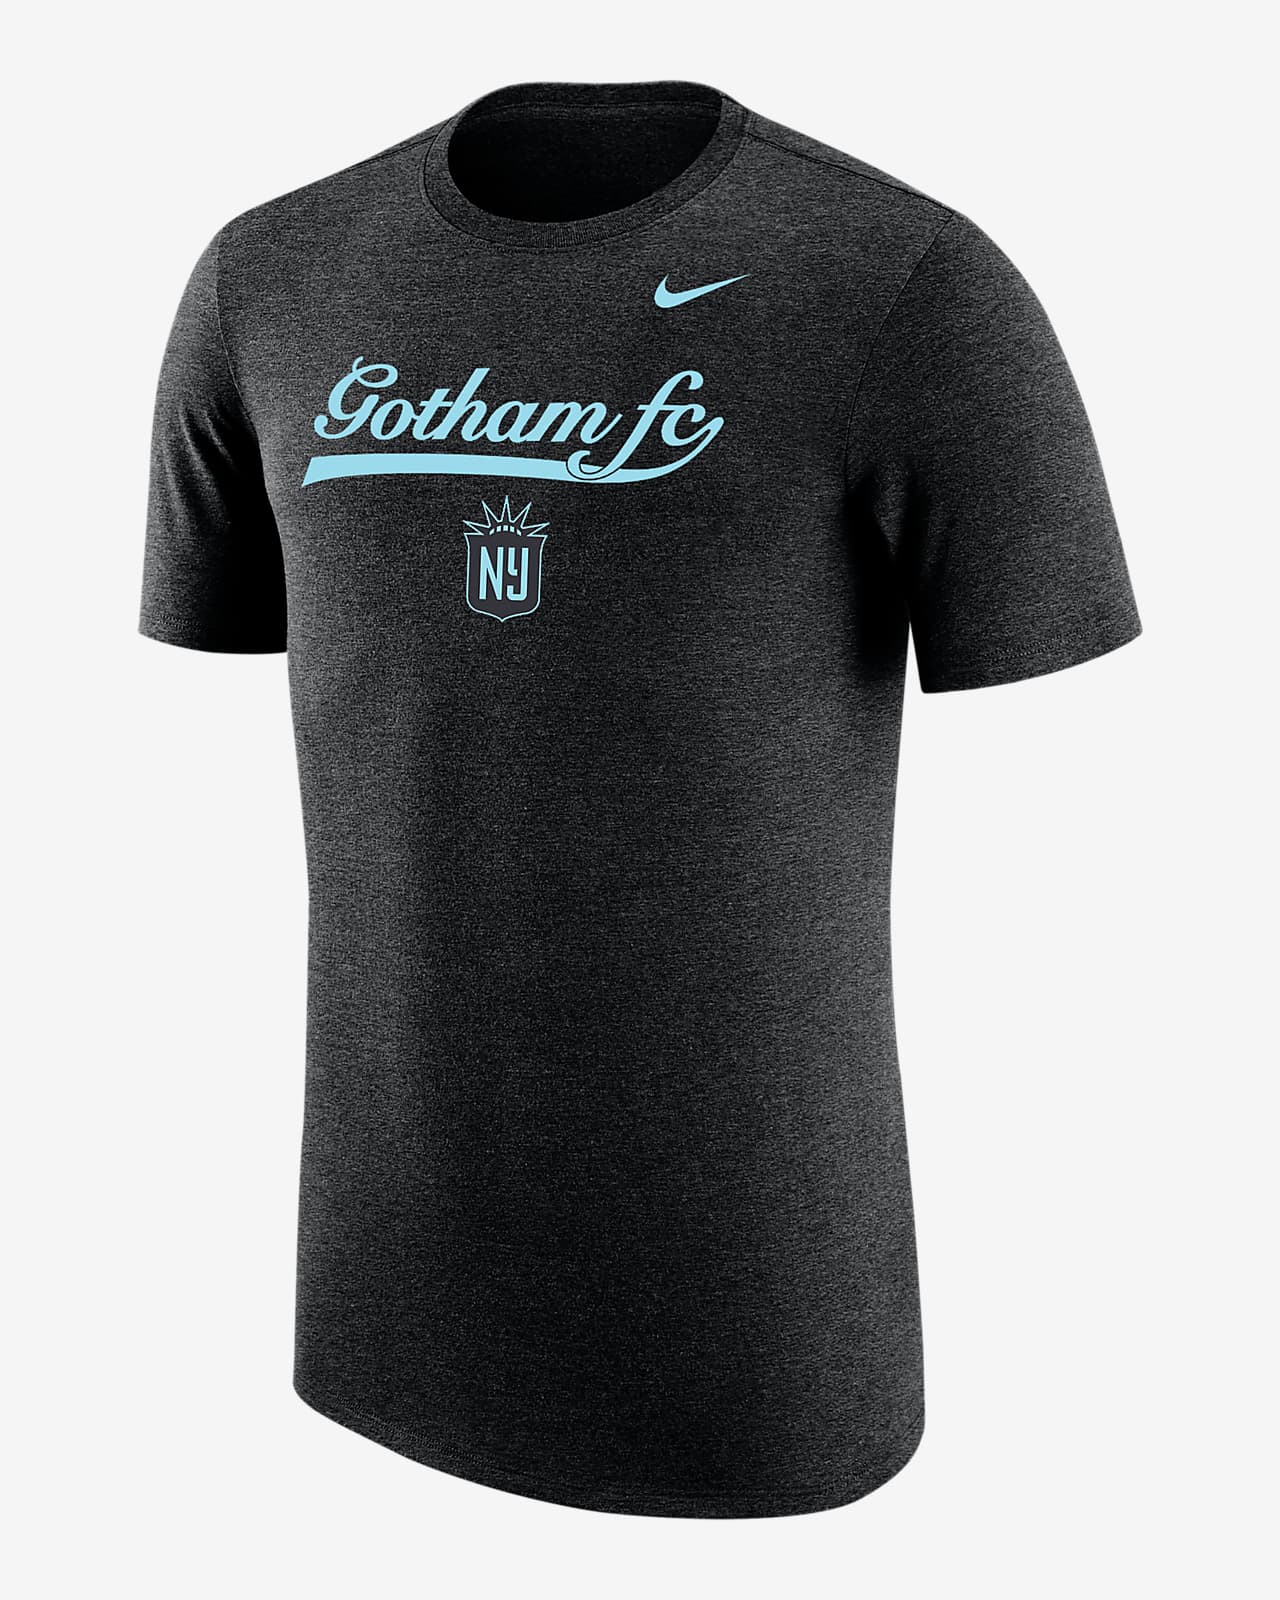 Gotham FC Men's Nike Soccer T-Shirt